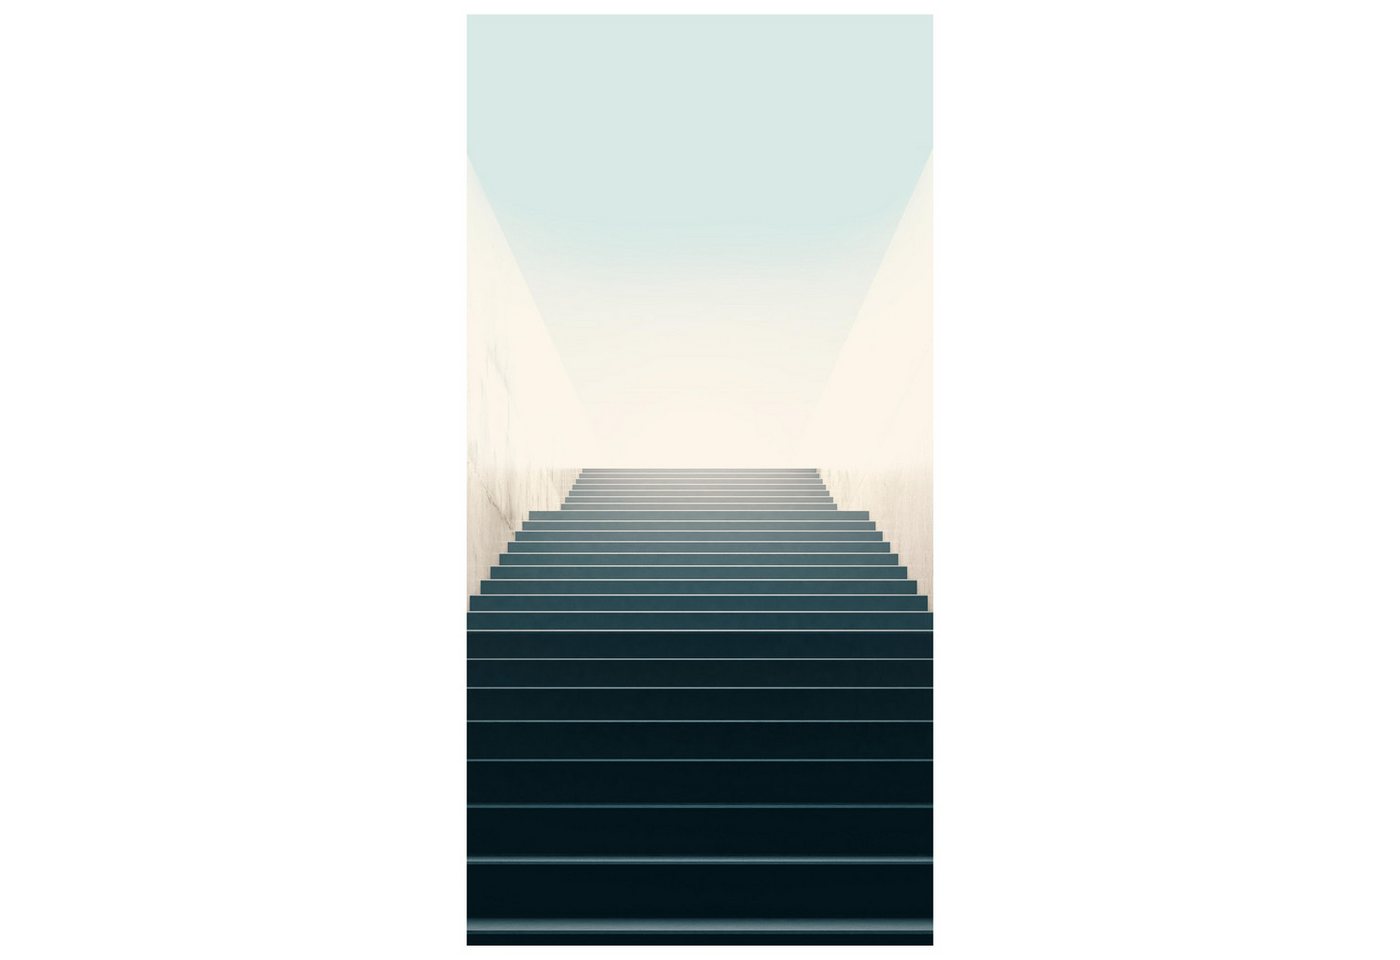 wandmotiv24 Türtapete Treppe in den Himmel, Licht & Schatten, glatt, Fototapete, Wandtapete, Motivtapete, matt, selbstklebende Vliestapete von wandmotiv24